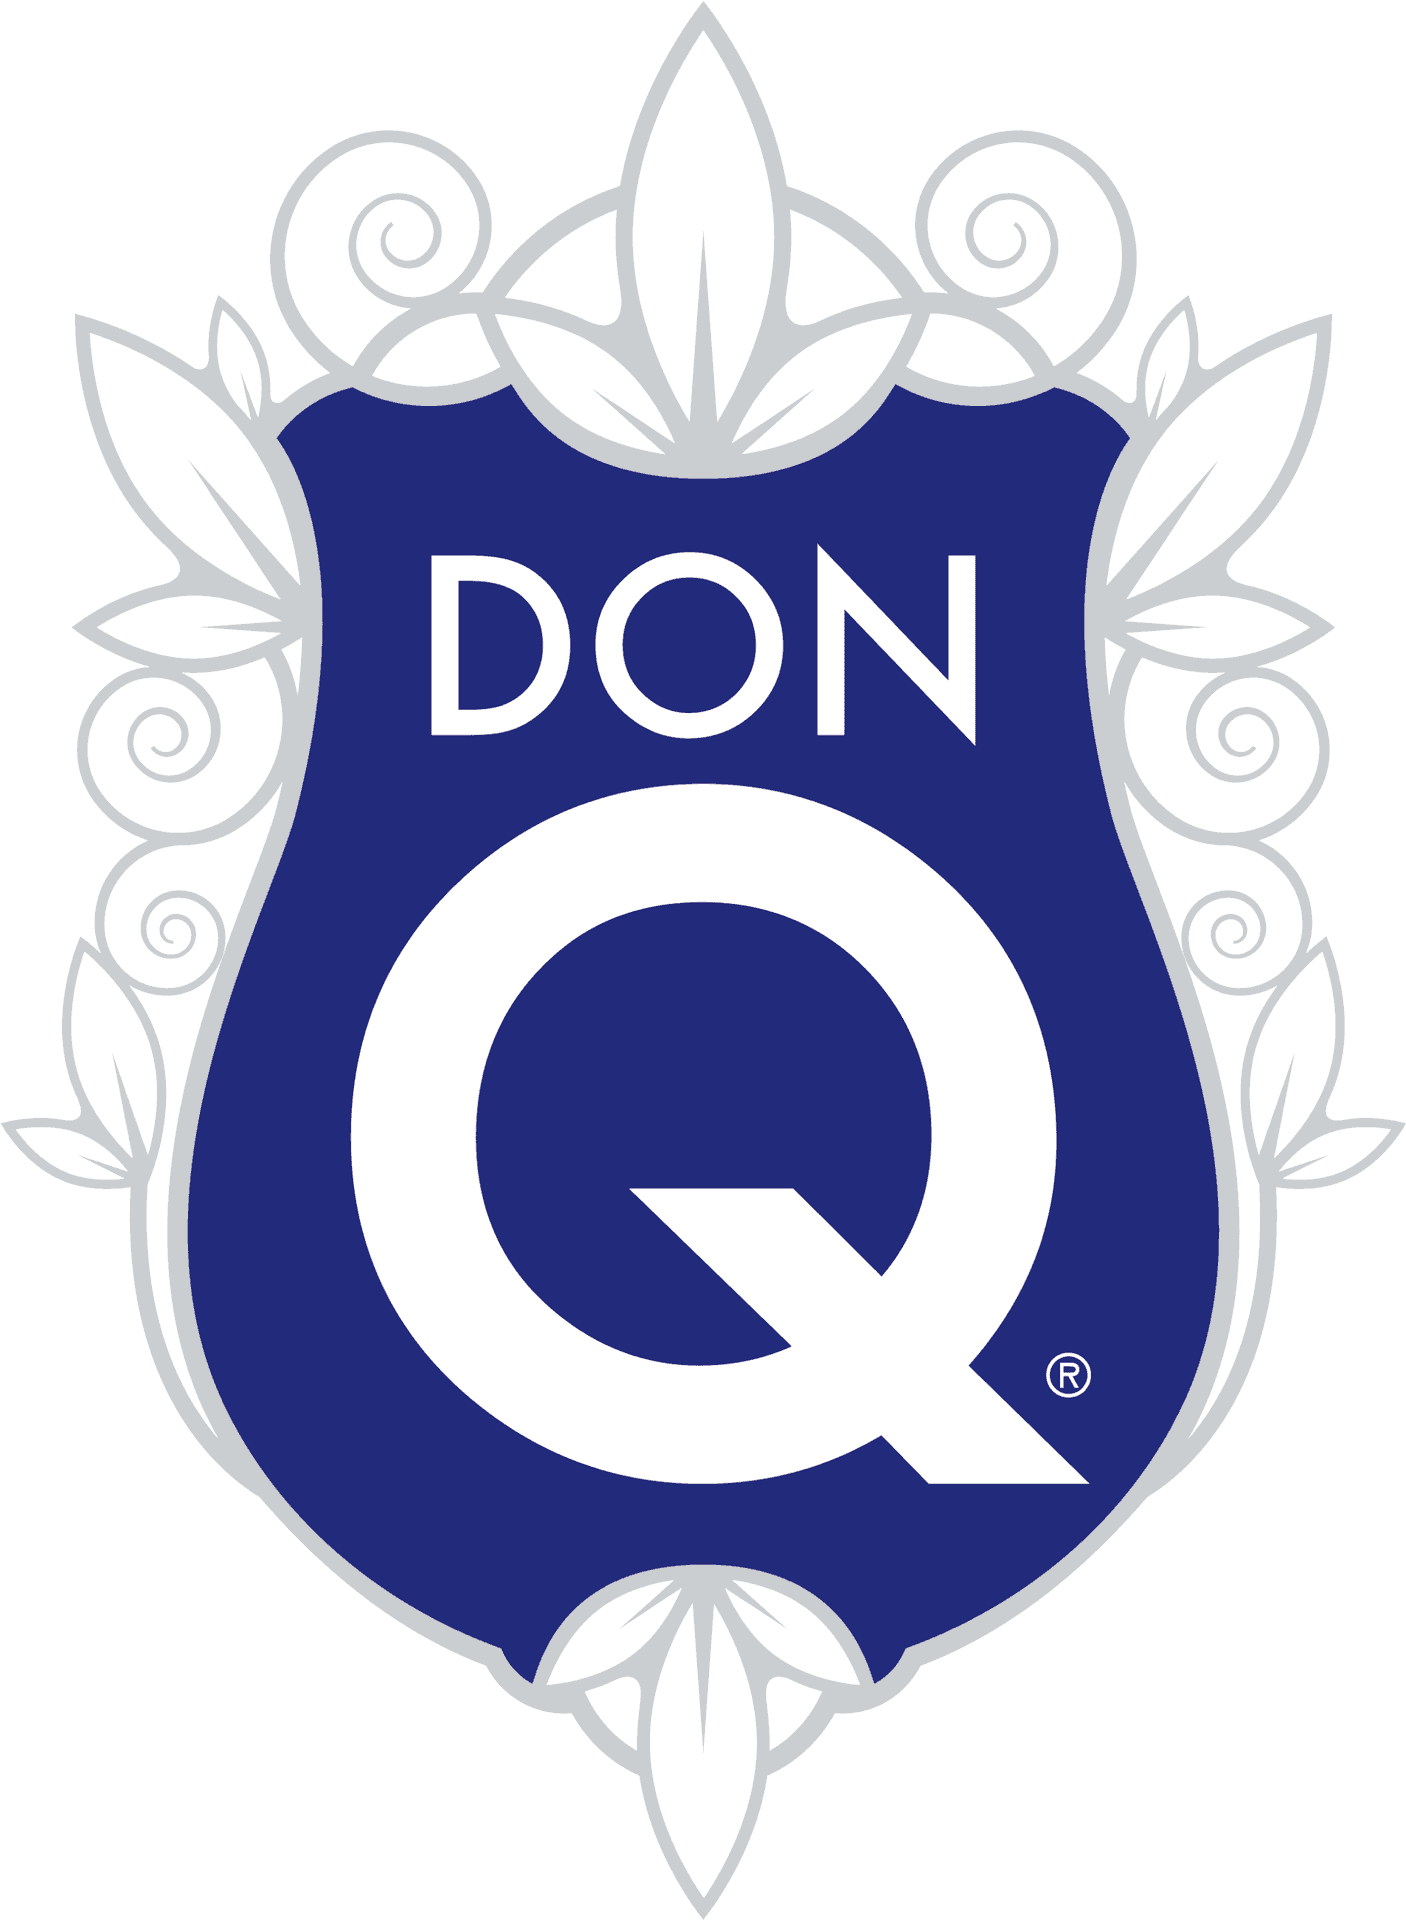 Don Q Rum Logo PNG